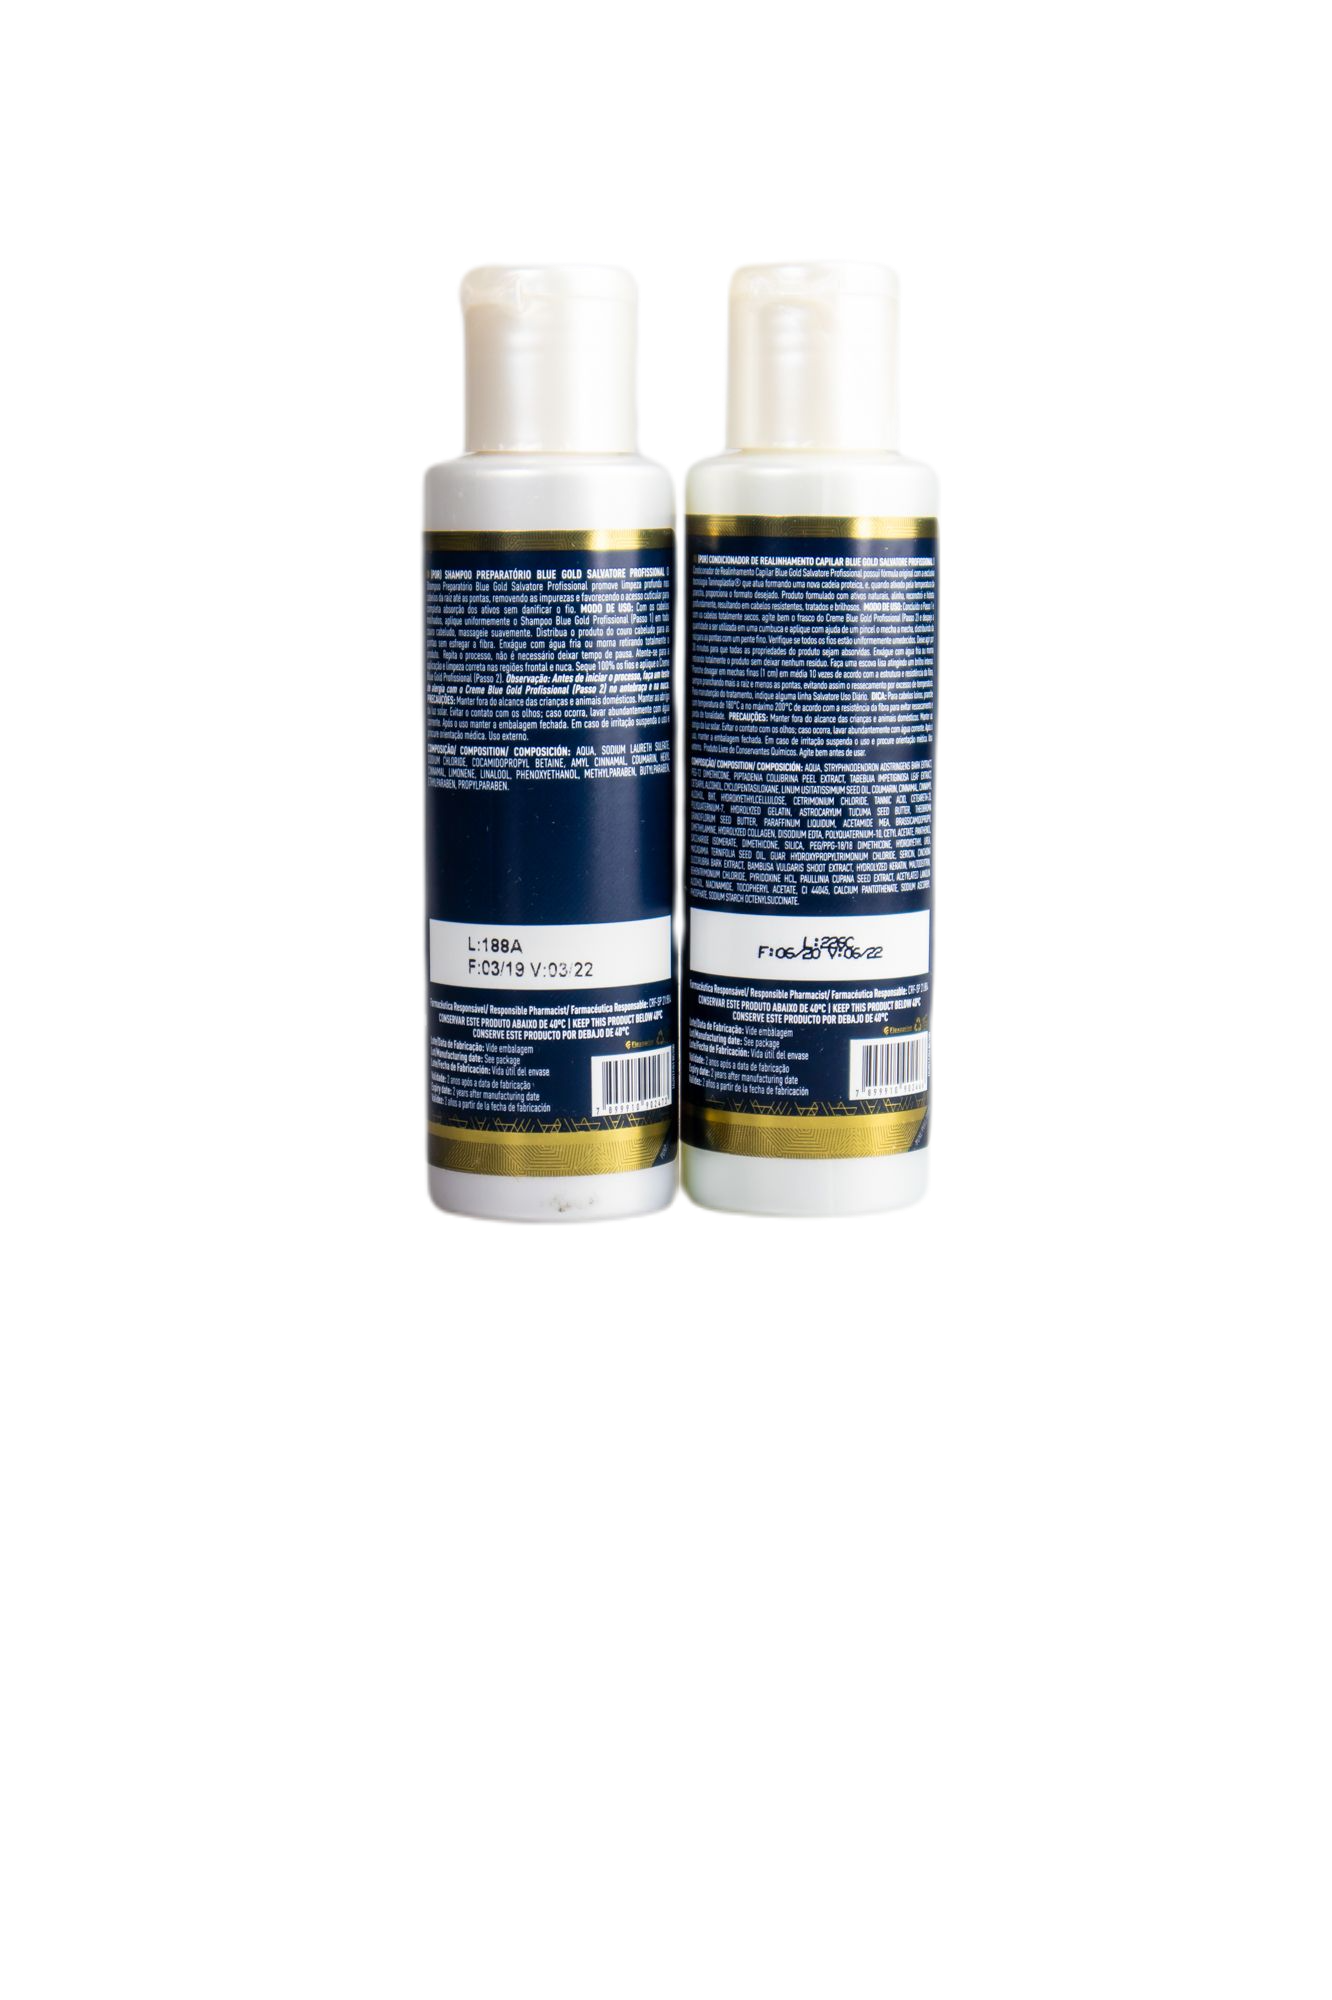 Salvatore Brazilian Keratin Treatment New Edition Blue Gold System Tanino Hair Restructuring Kit 2x100ml - Salvatore